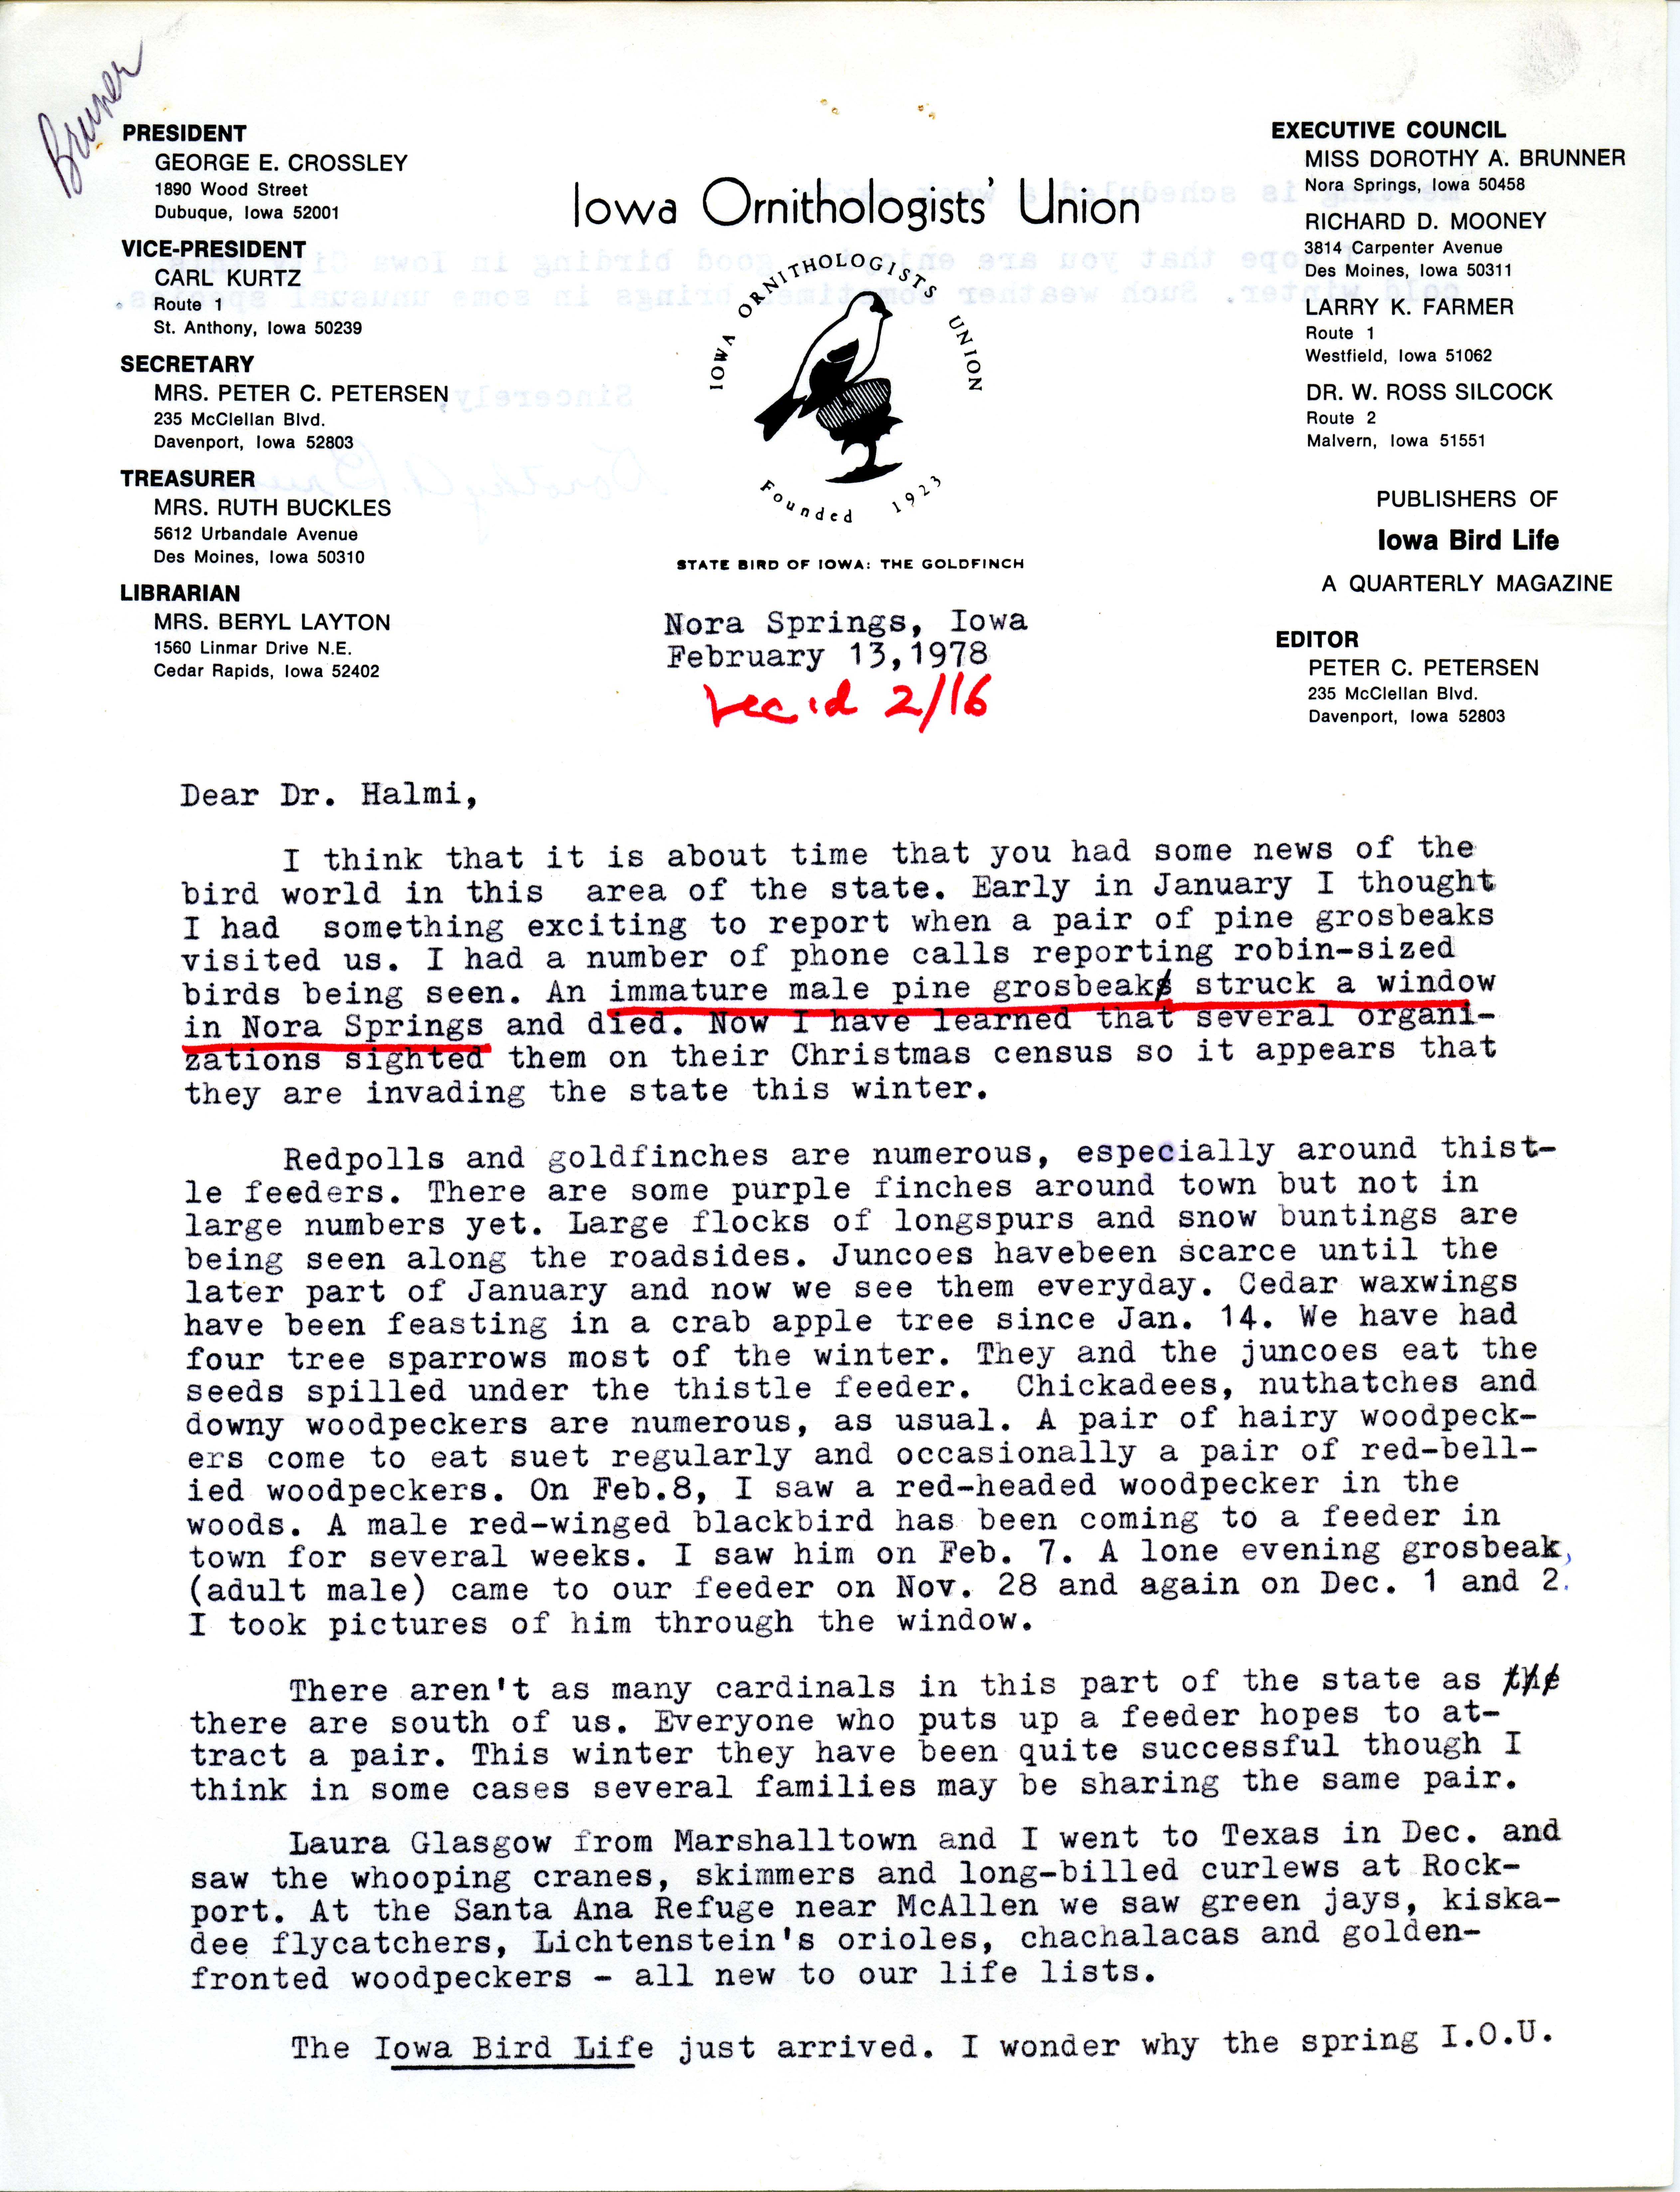 Dorothy A. Brunner letter to Nicholas S. Halmi regarding bird sightings, February 13, 1978